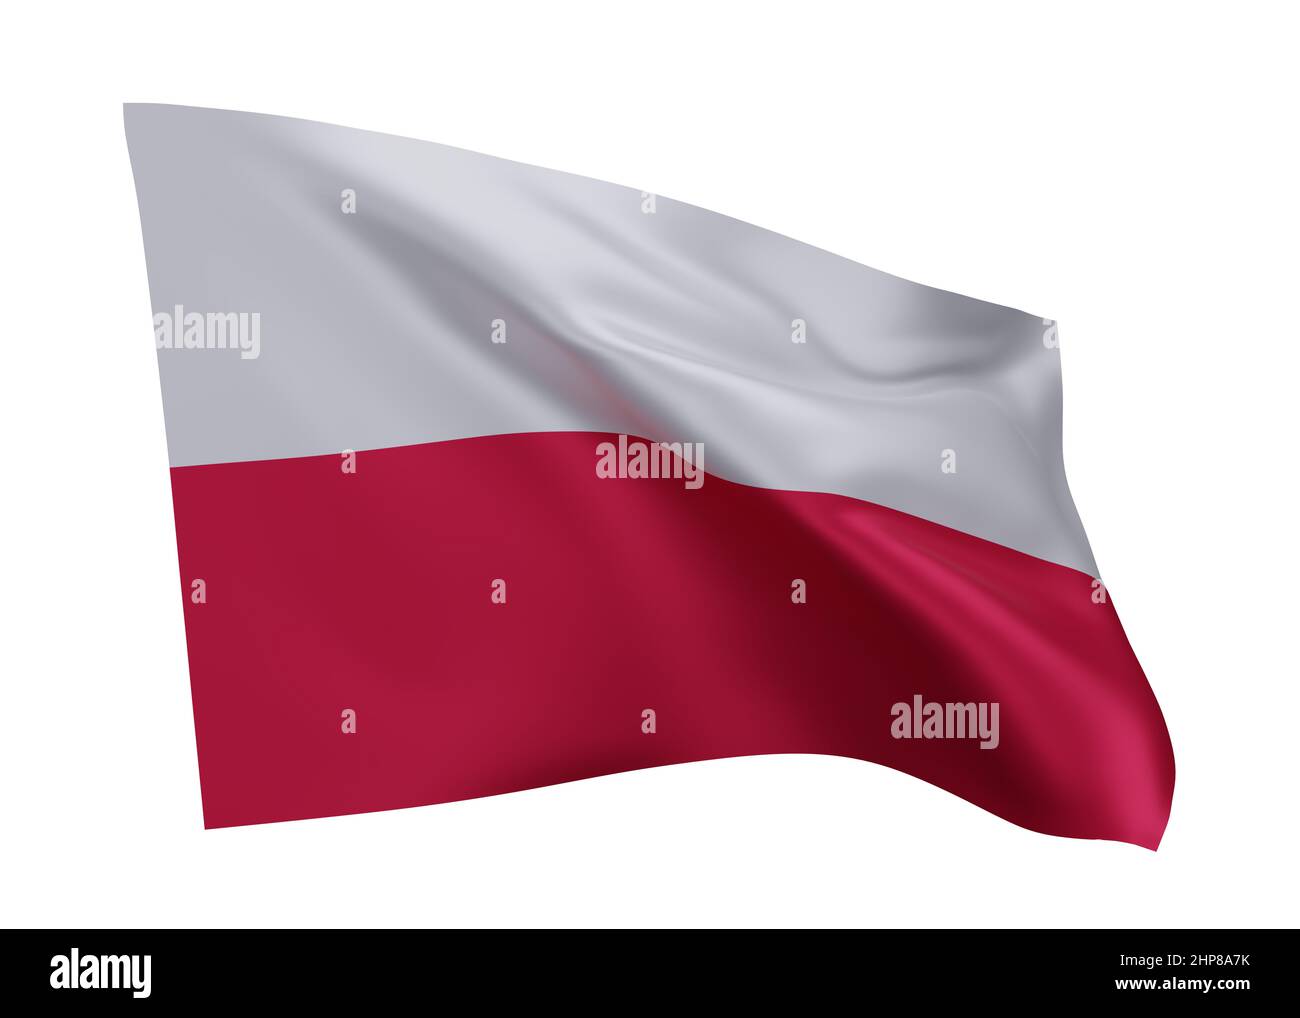 3d illustration flag of Poland. Polish high resolution flag isolated against white background. 3d rendering Stock Photo